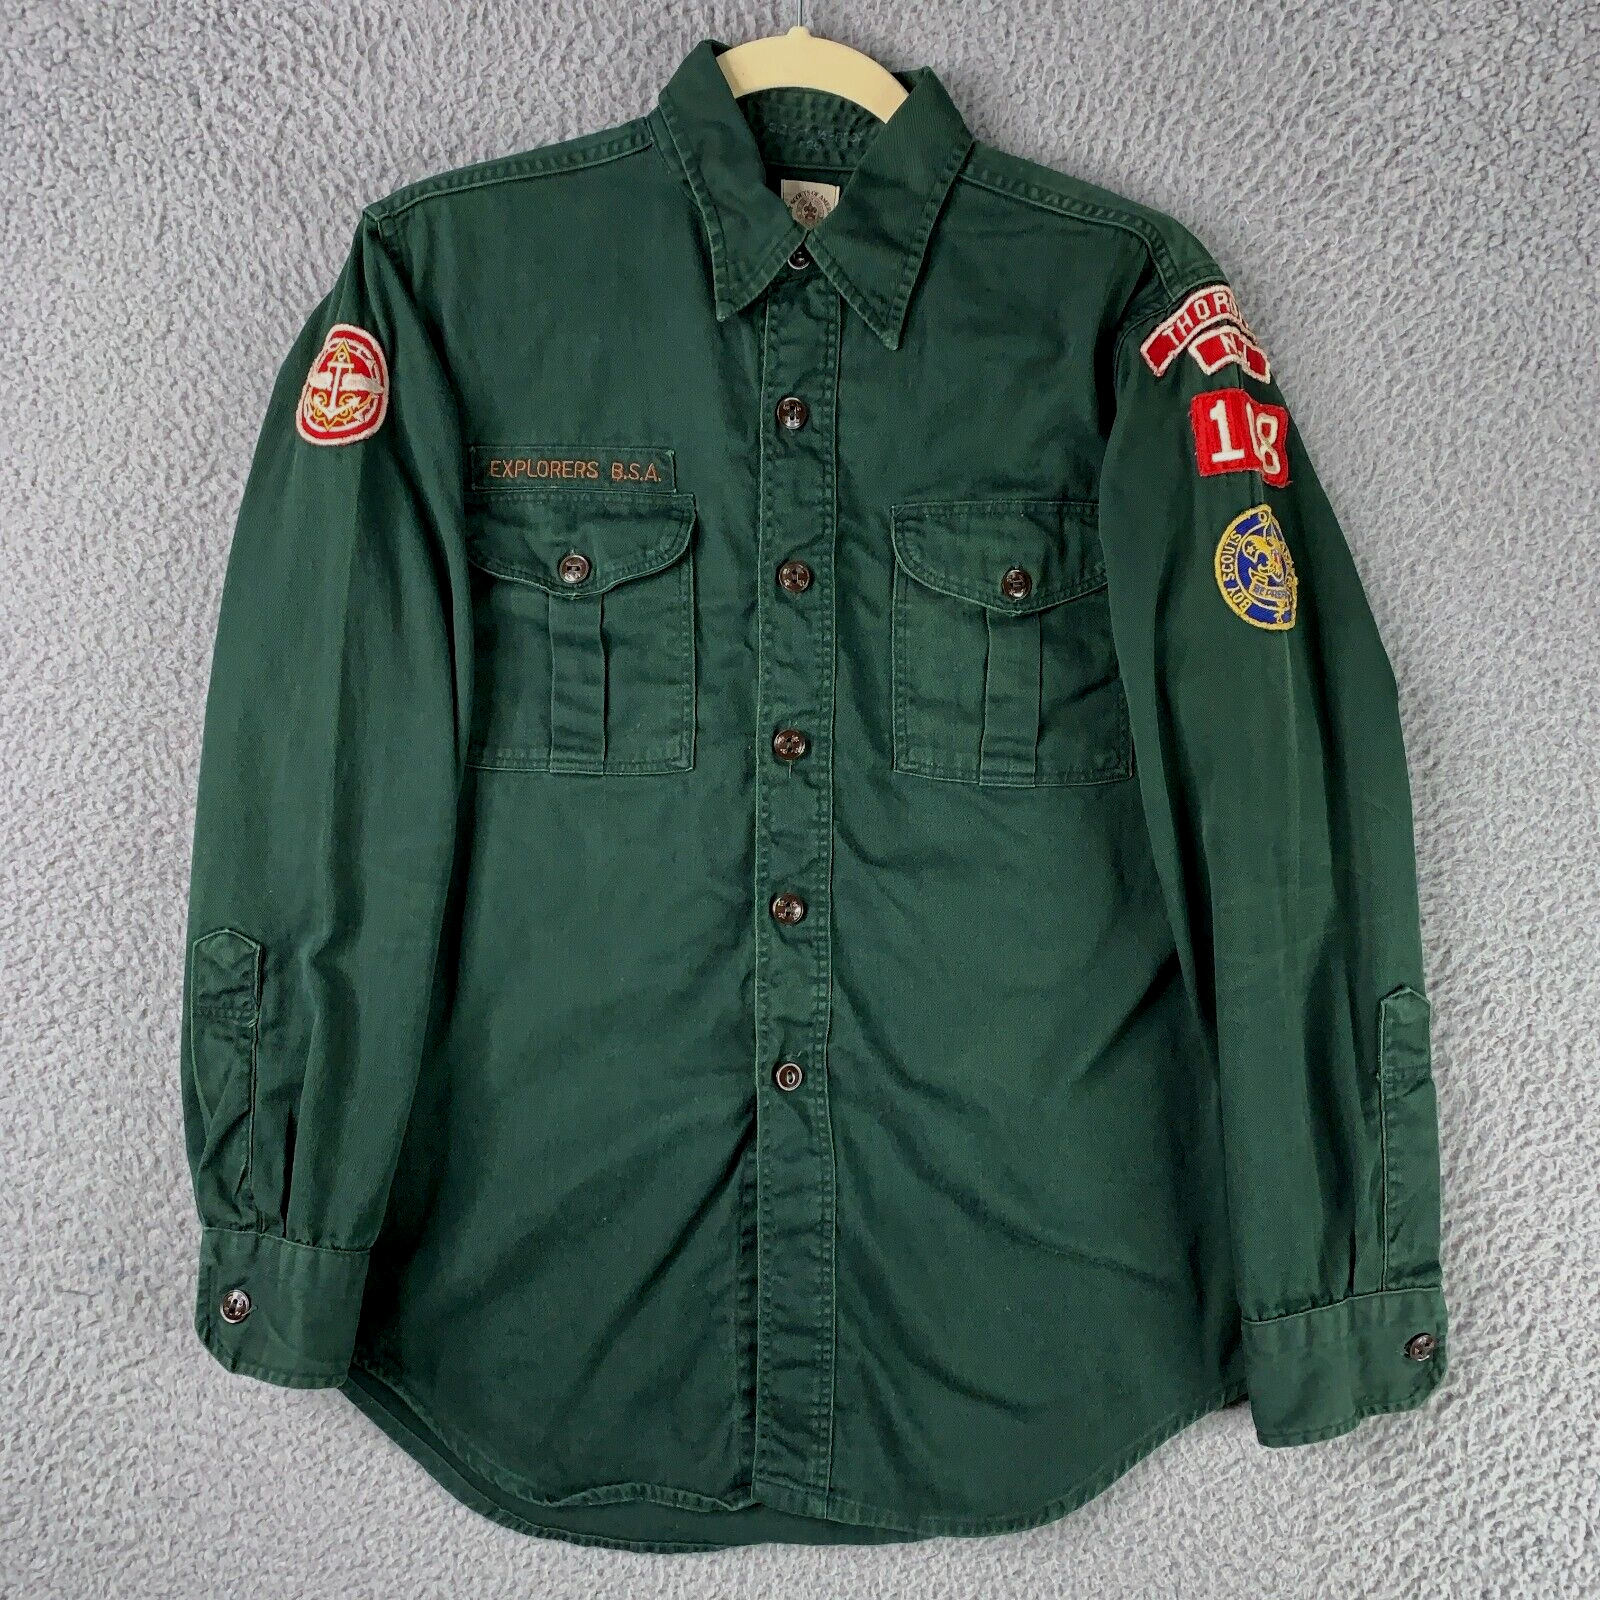 Vintage Boy Scouts Uniform Shirt Size 14-16 Green BSA 1950s 1960s Thorofare NJ